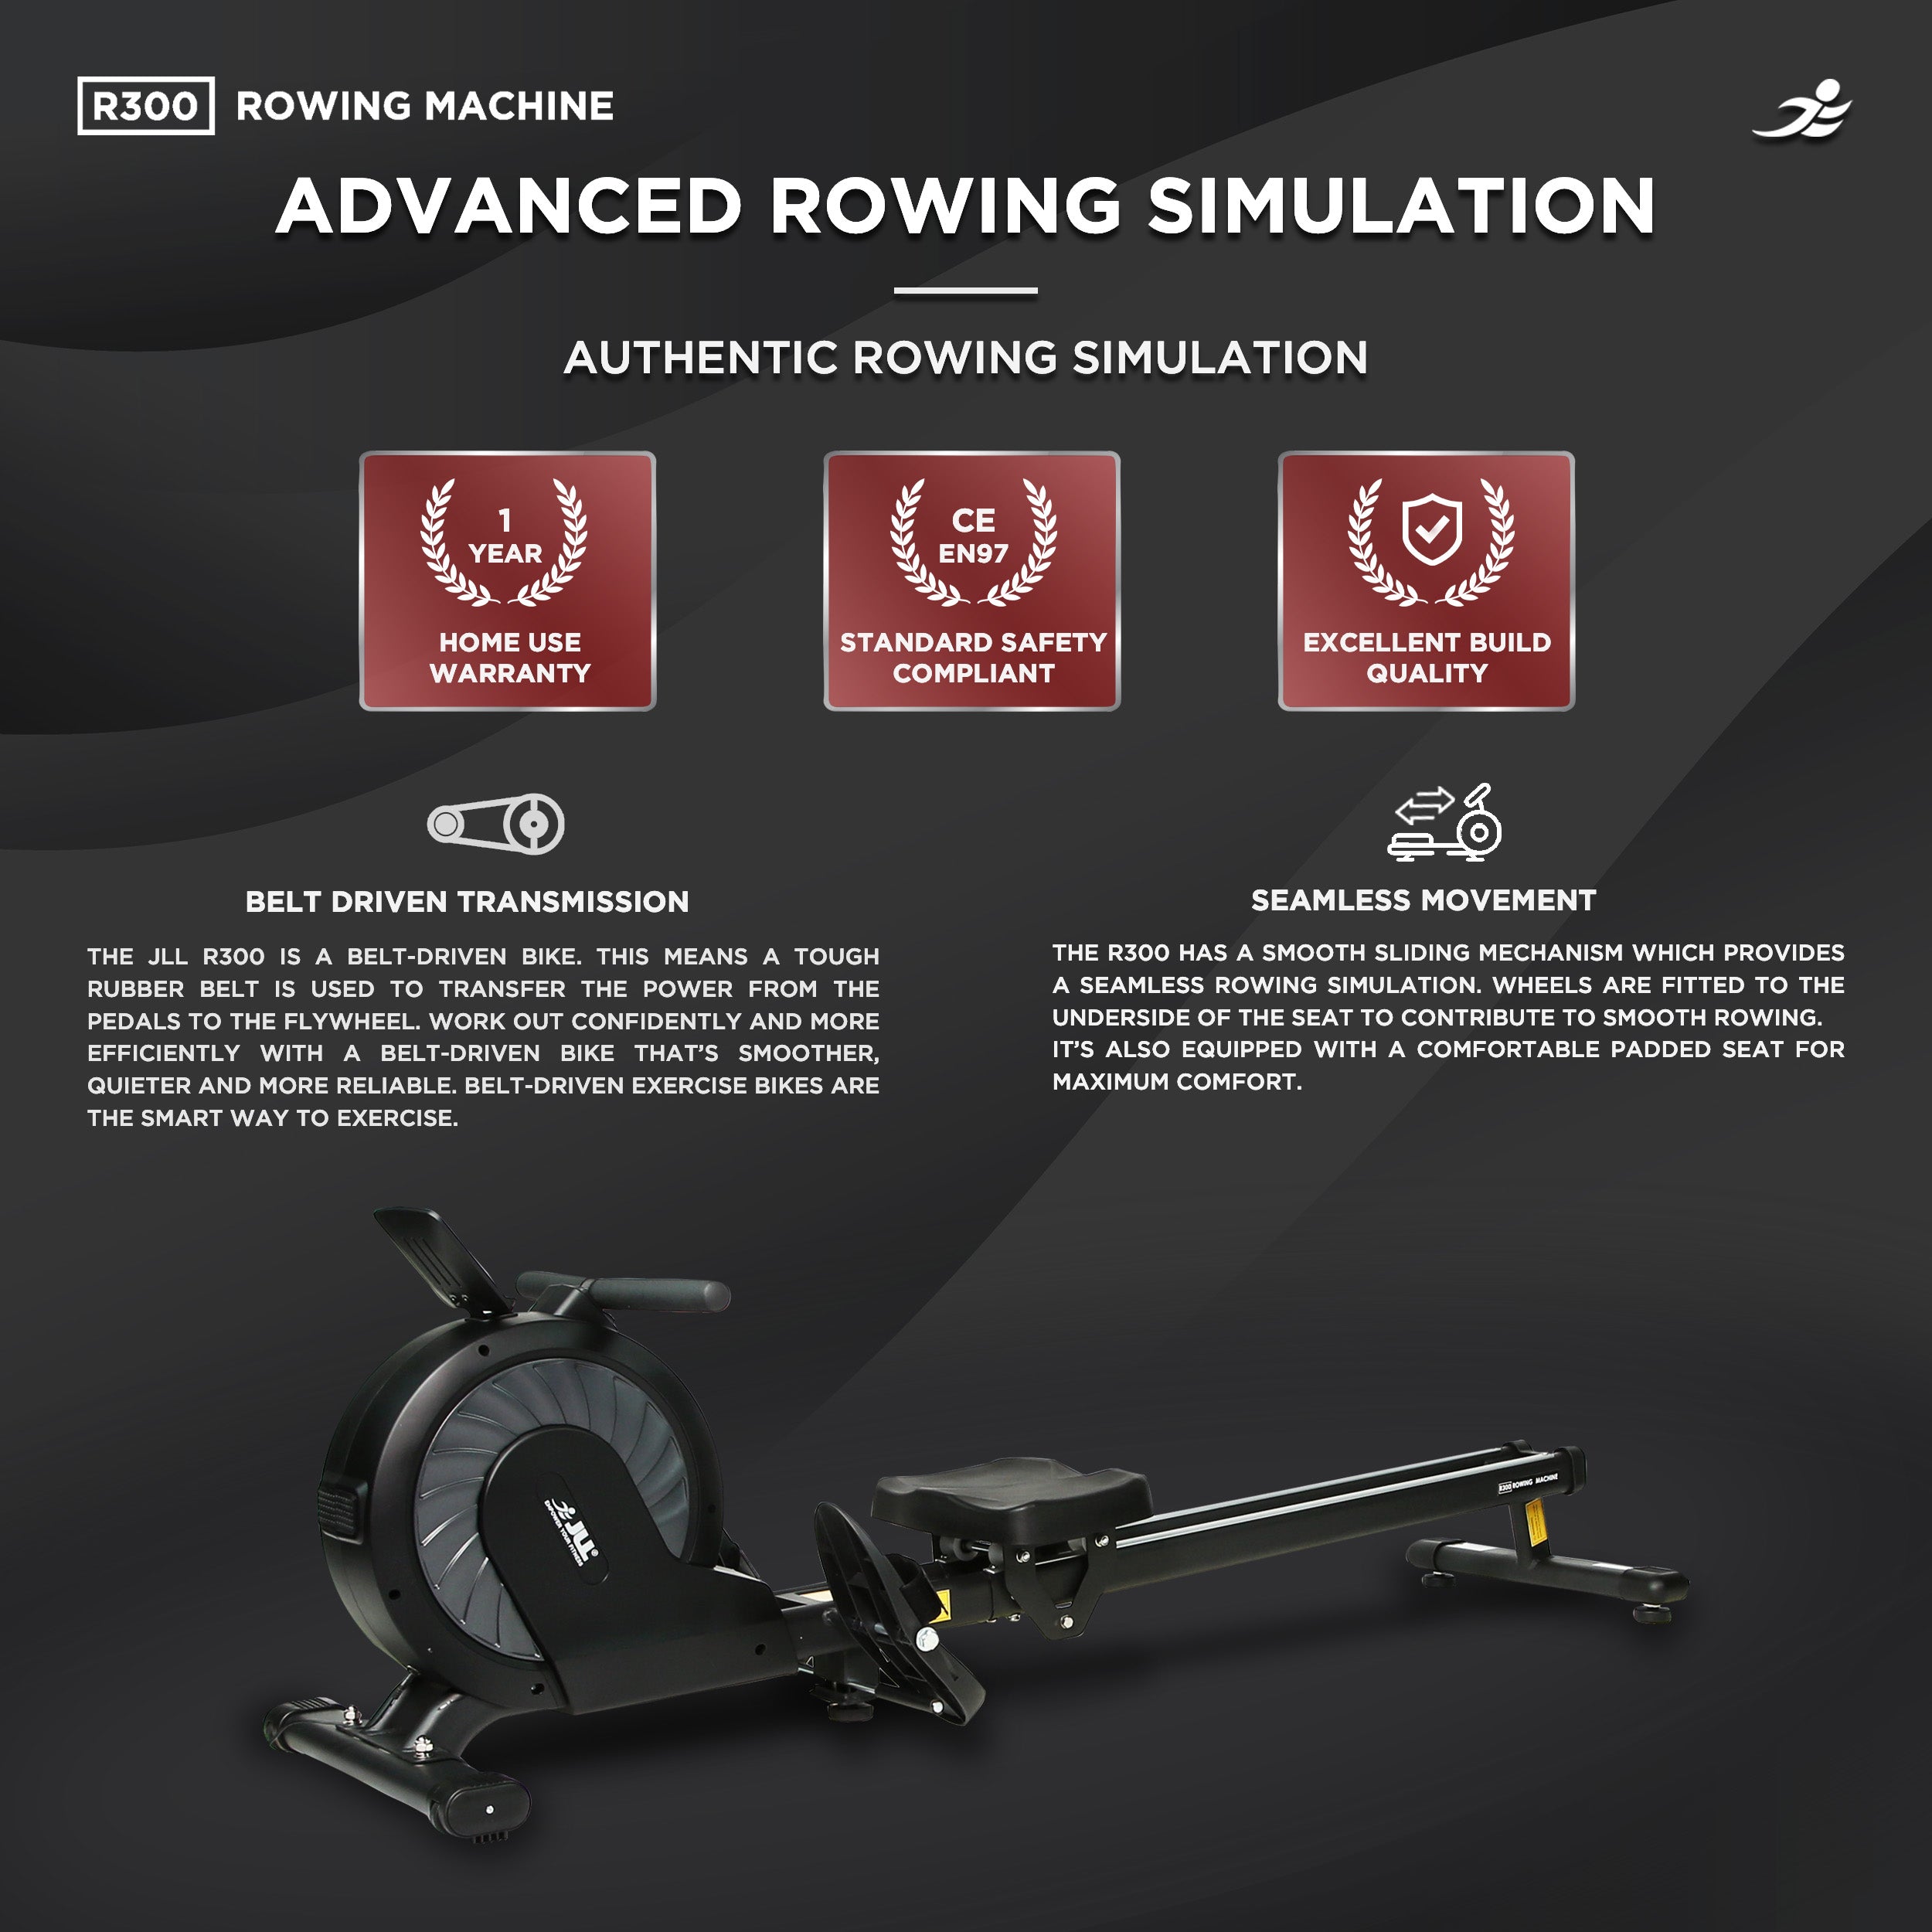 R300 Rowing Machine